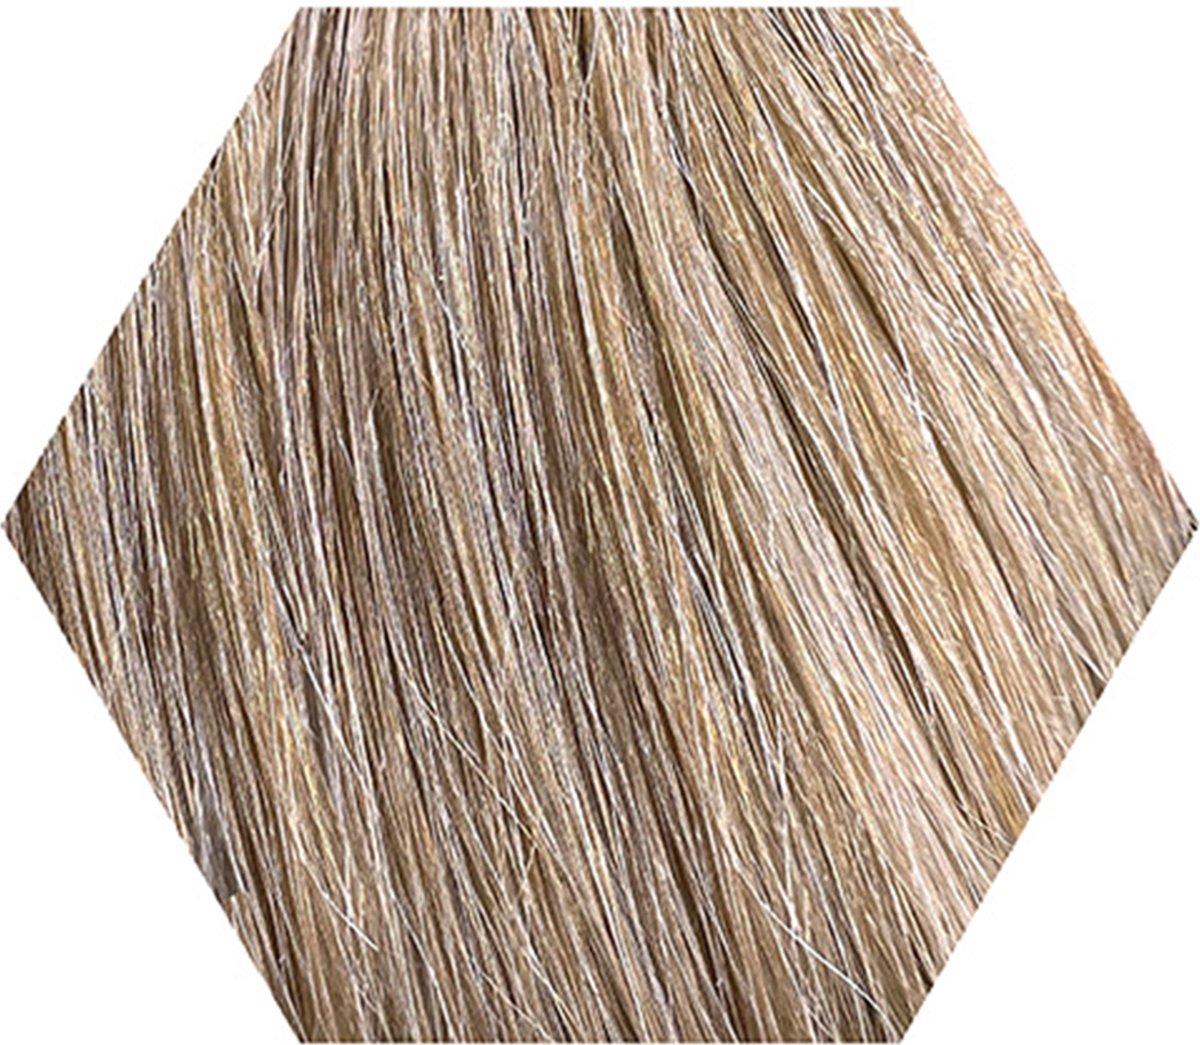 Wecolour Haarverf - Extra as lichtblond 10.11 - Kapperskwaliteit Haarkleuring